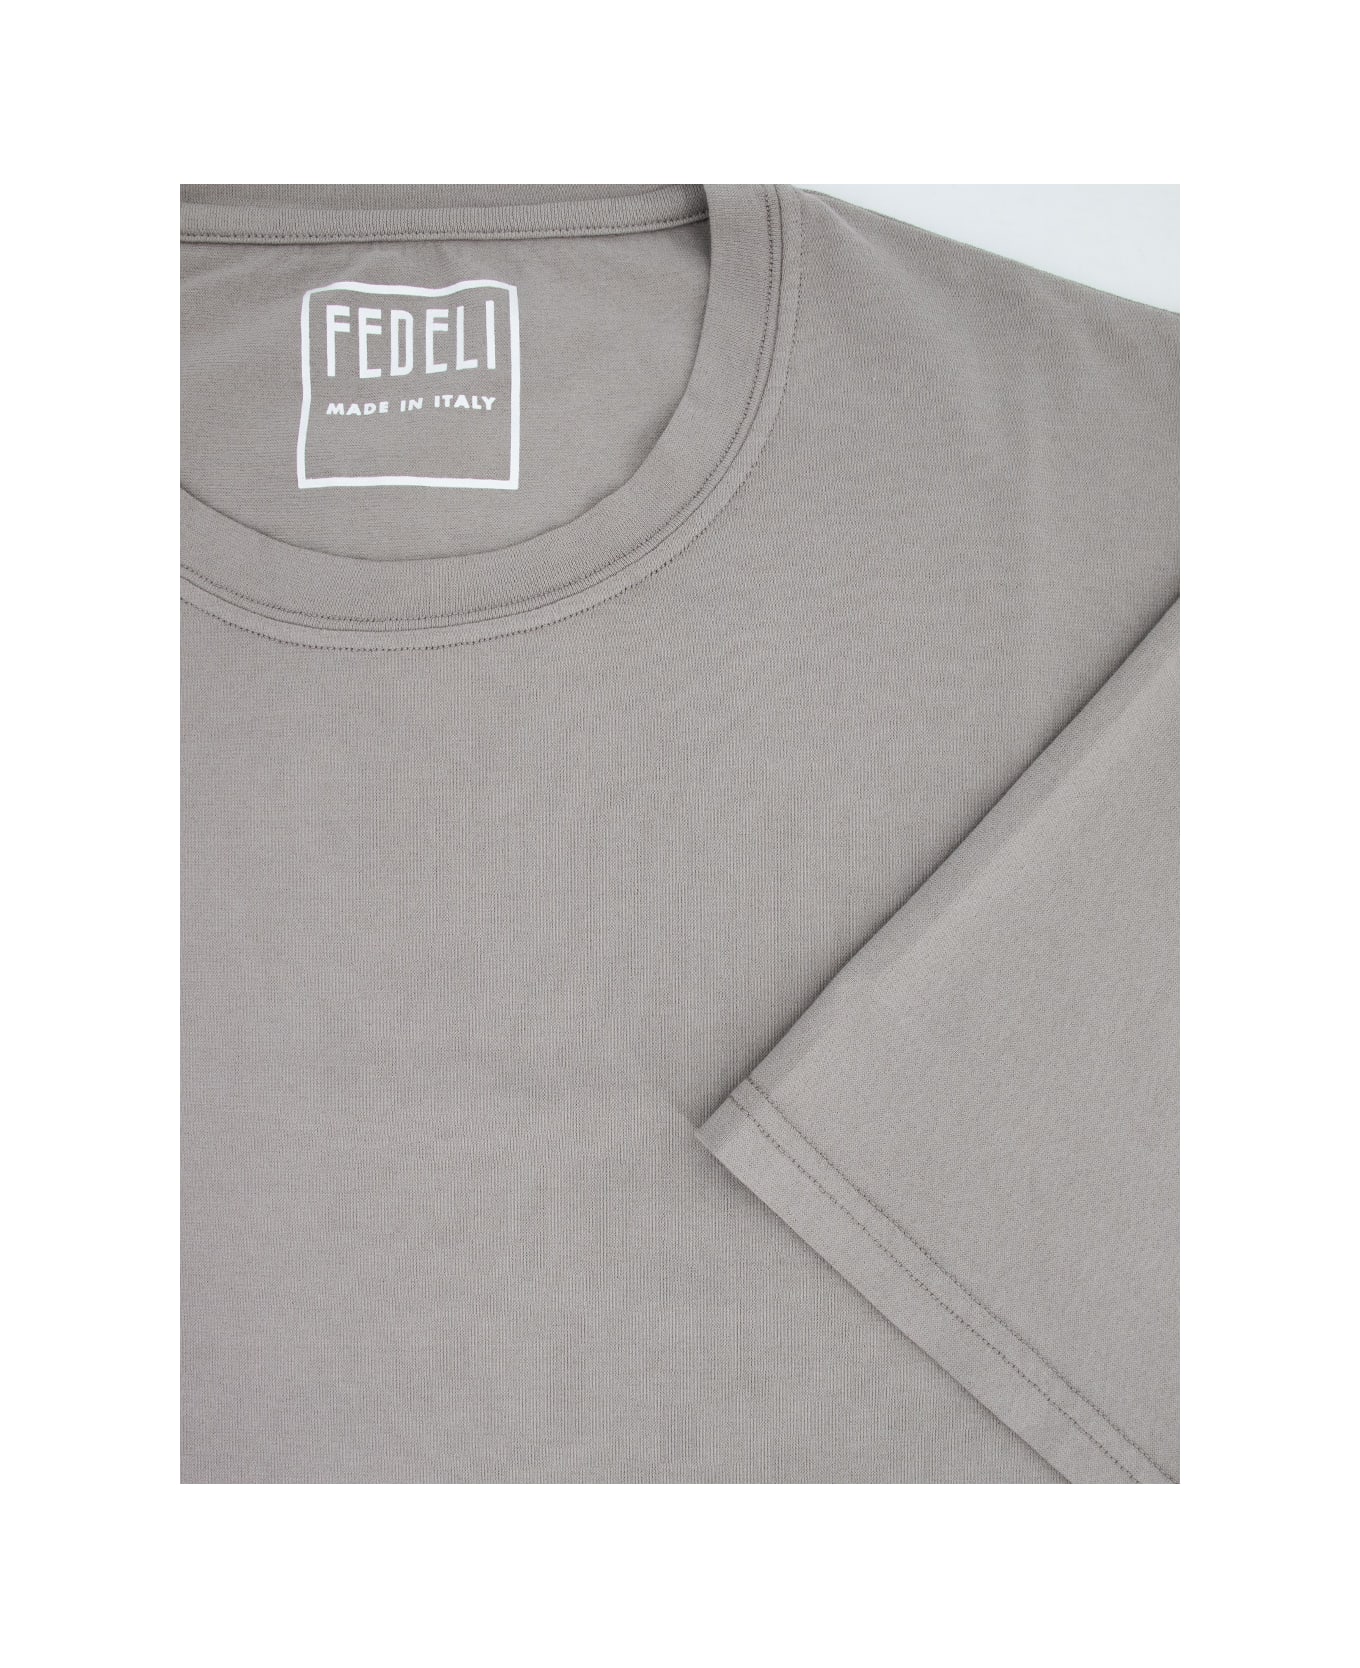 Fedeli T-shirt - 176